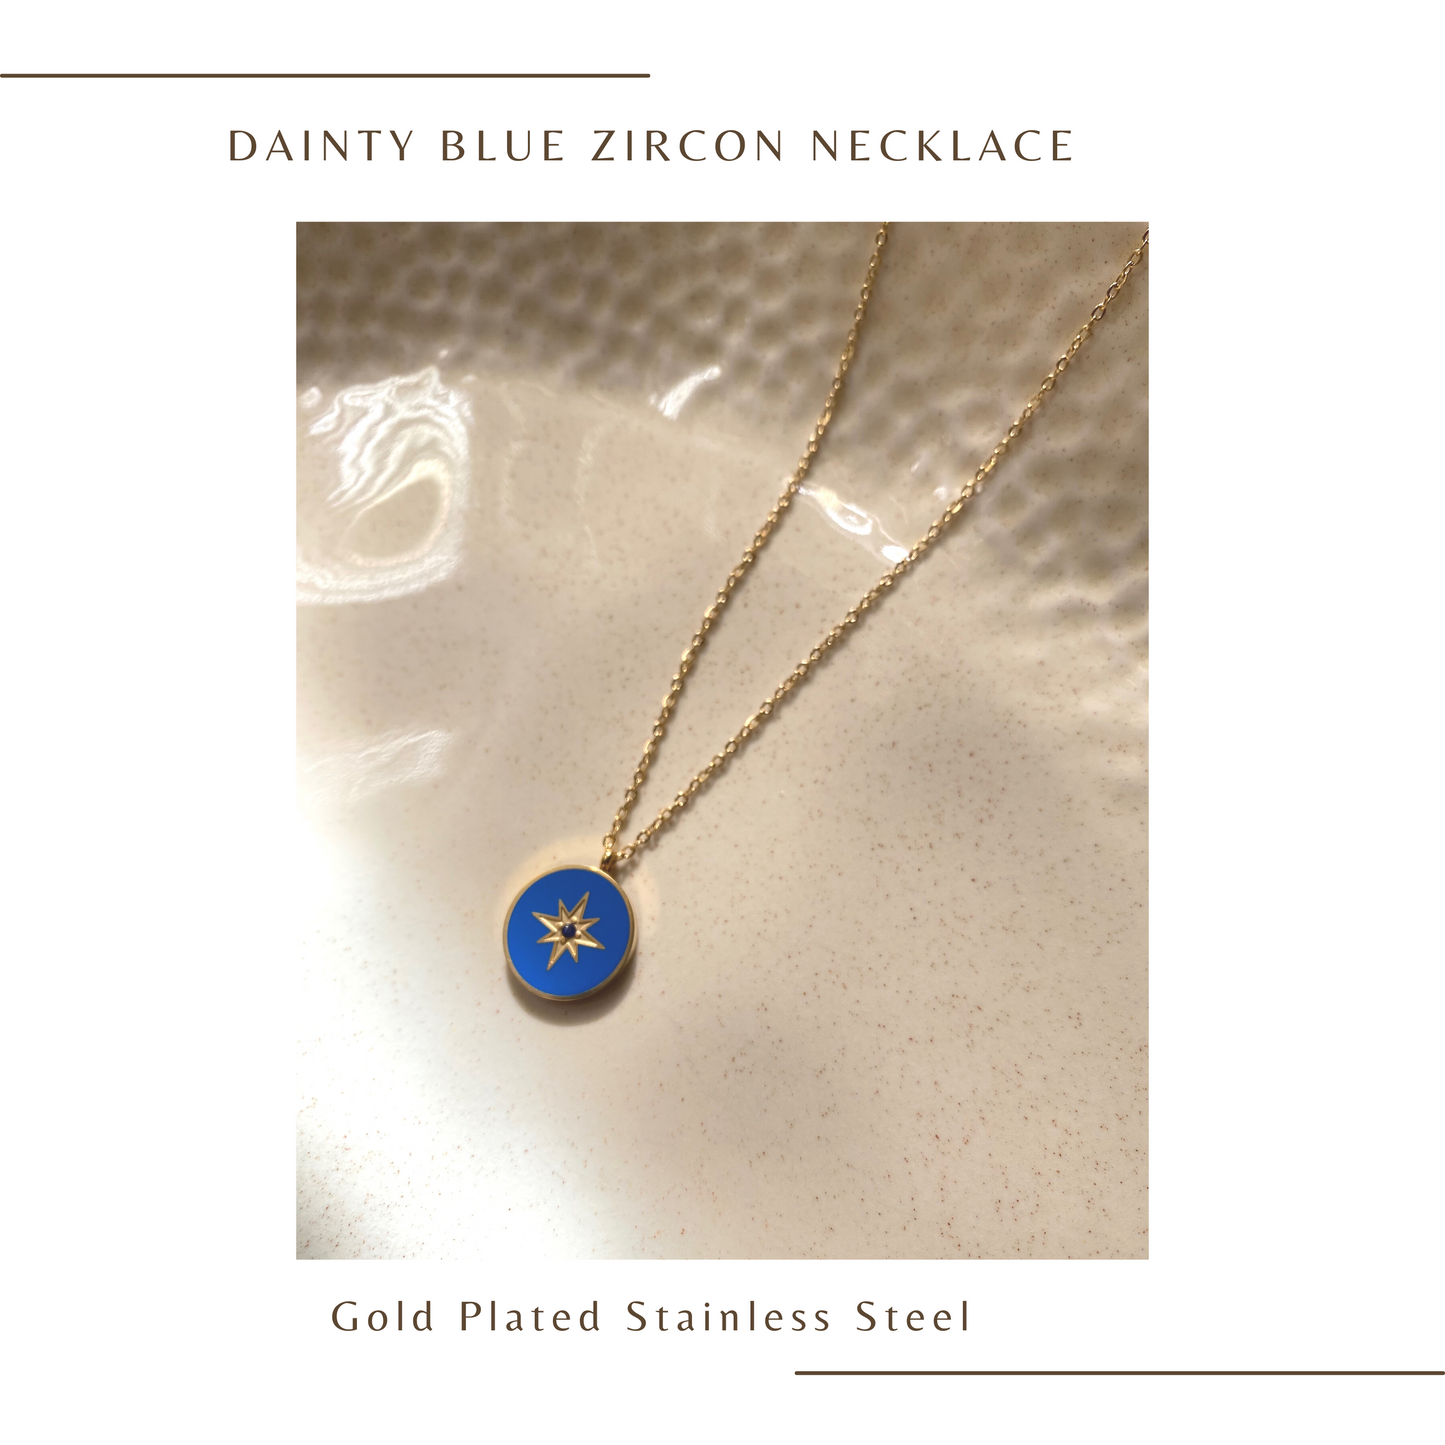 Dainty Blue Zircon Necklace